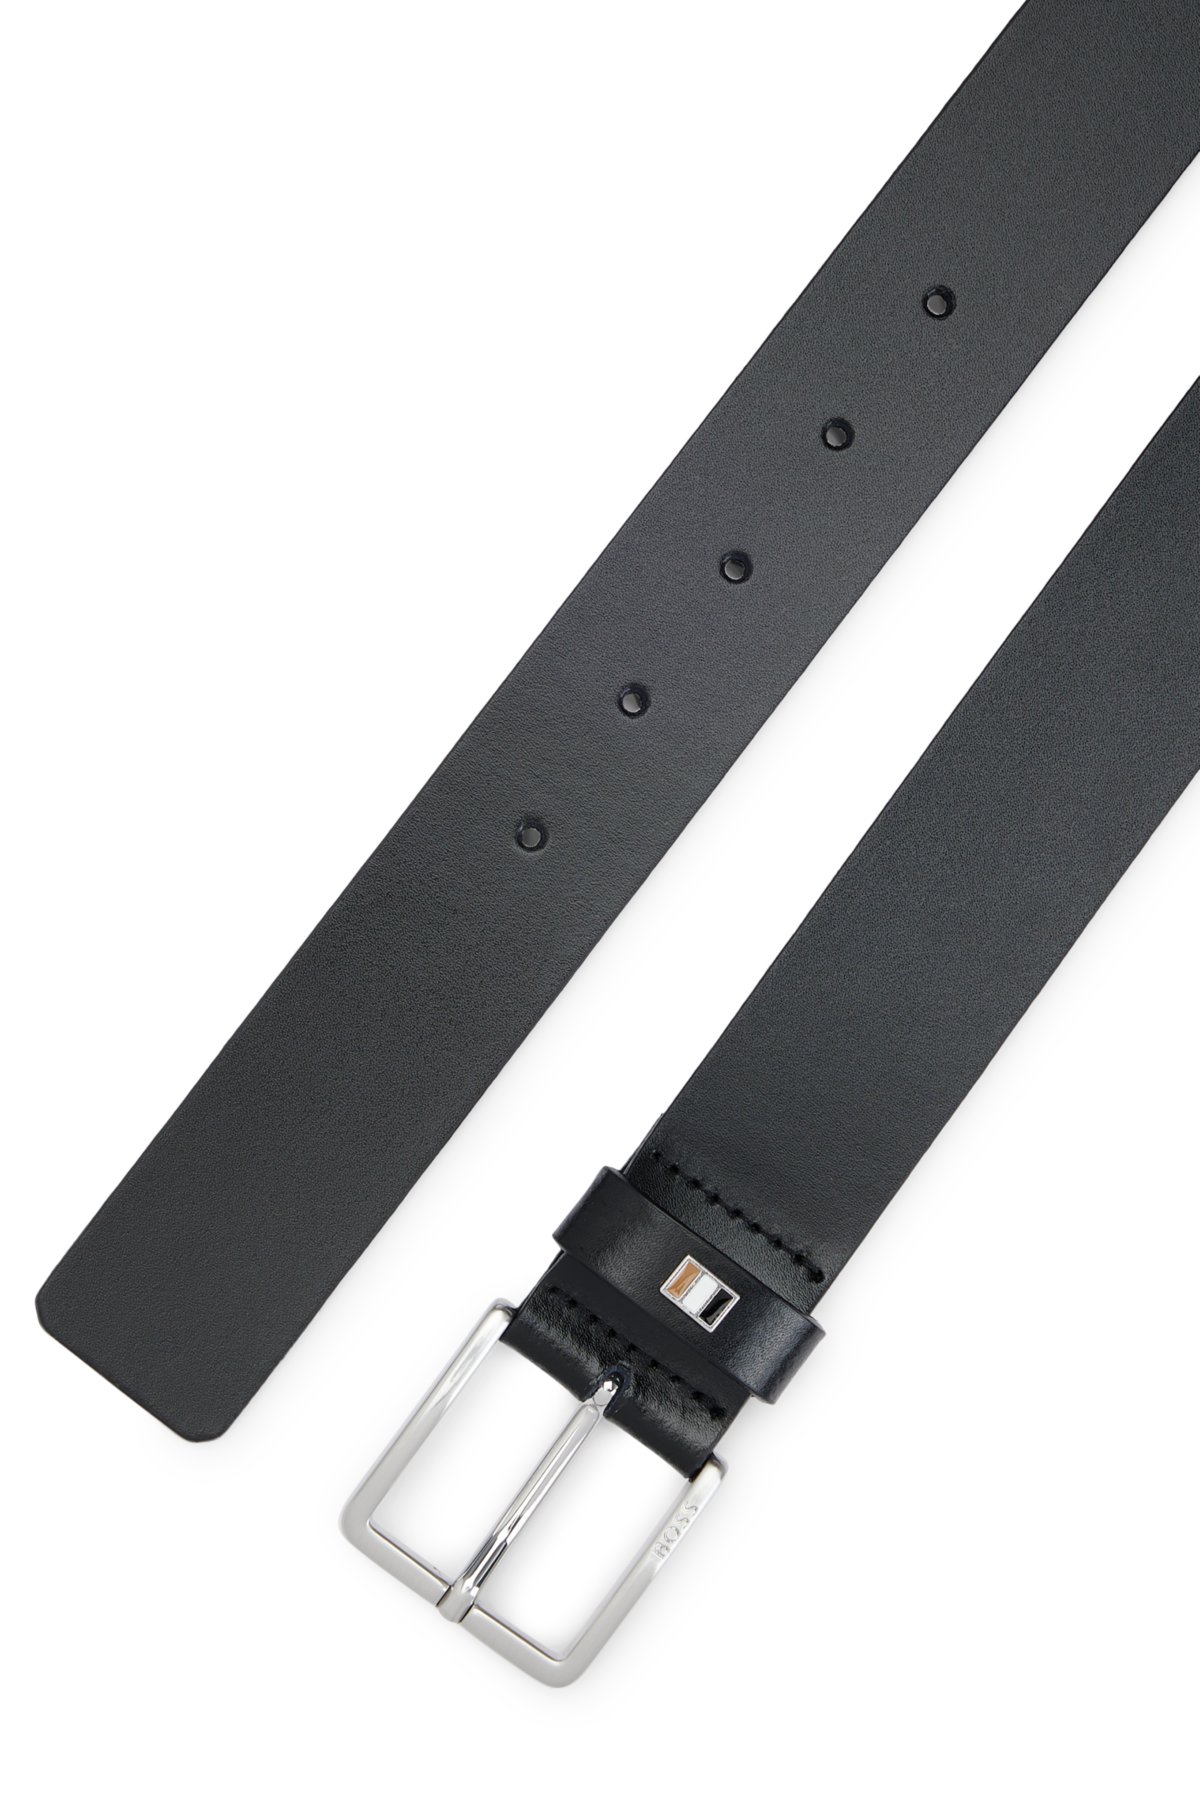 BOSS - Italian-leather belt with signature-stripe hardware